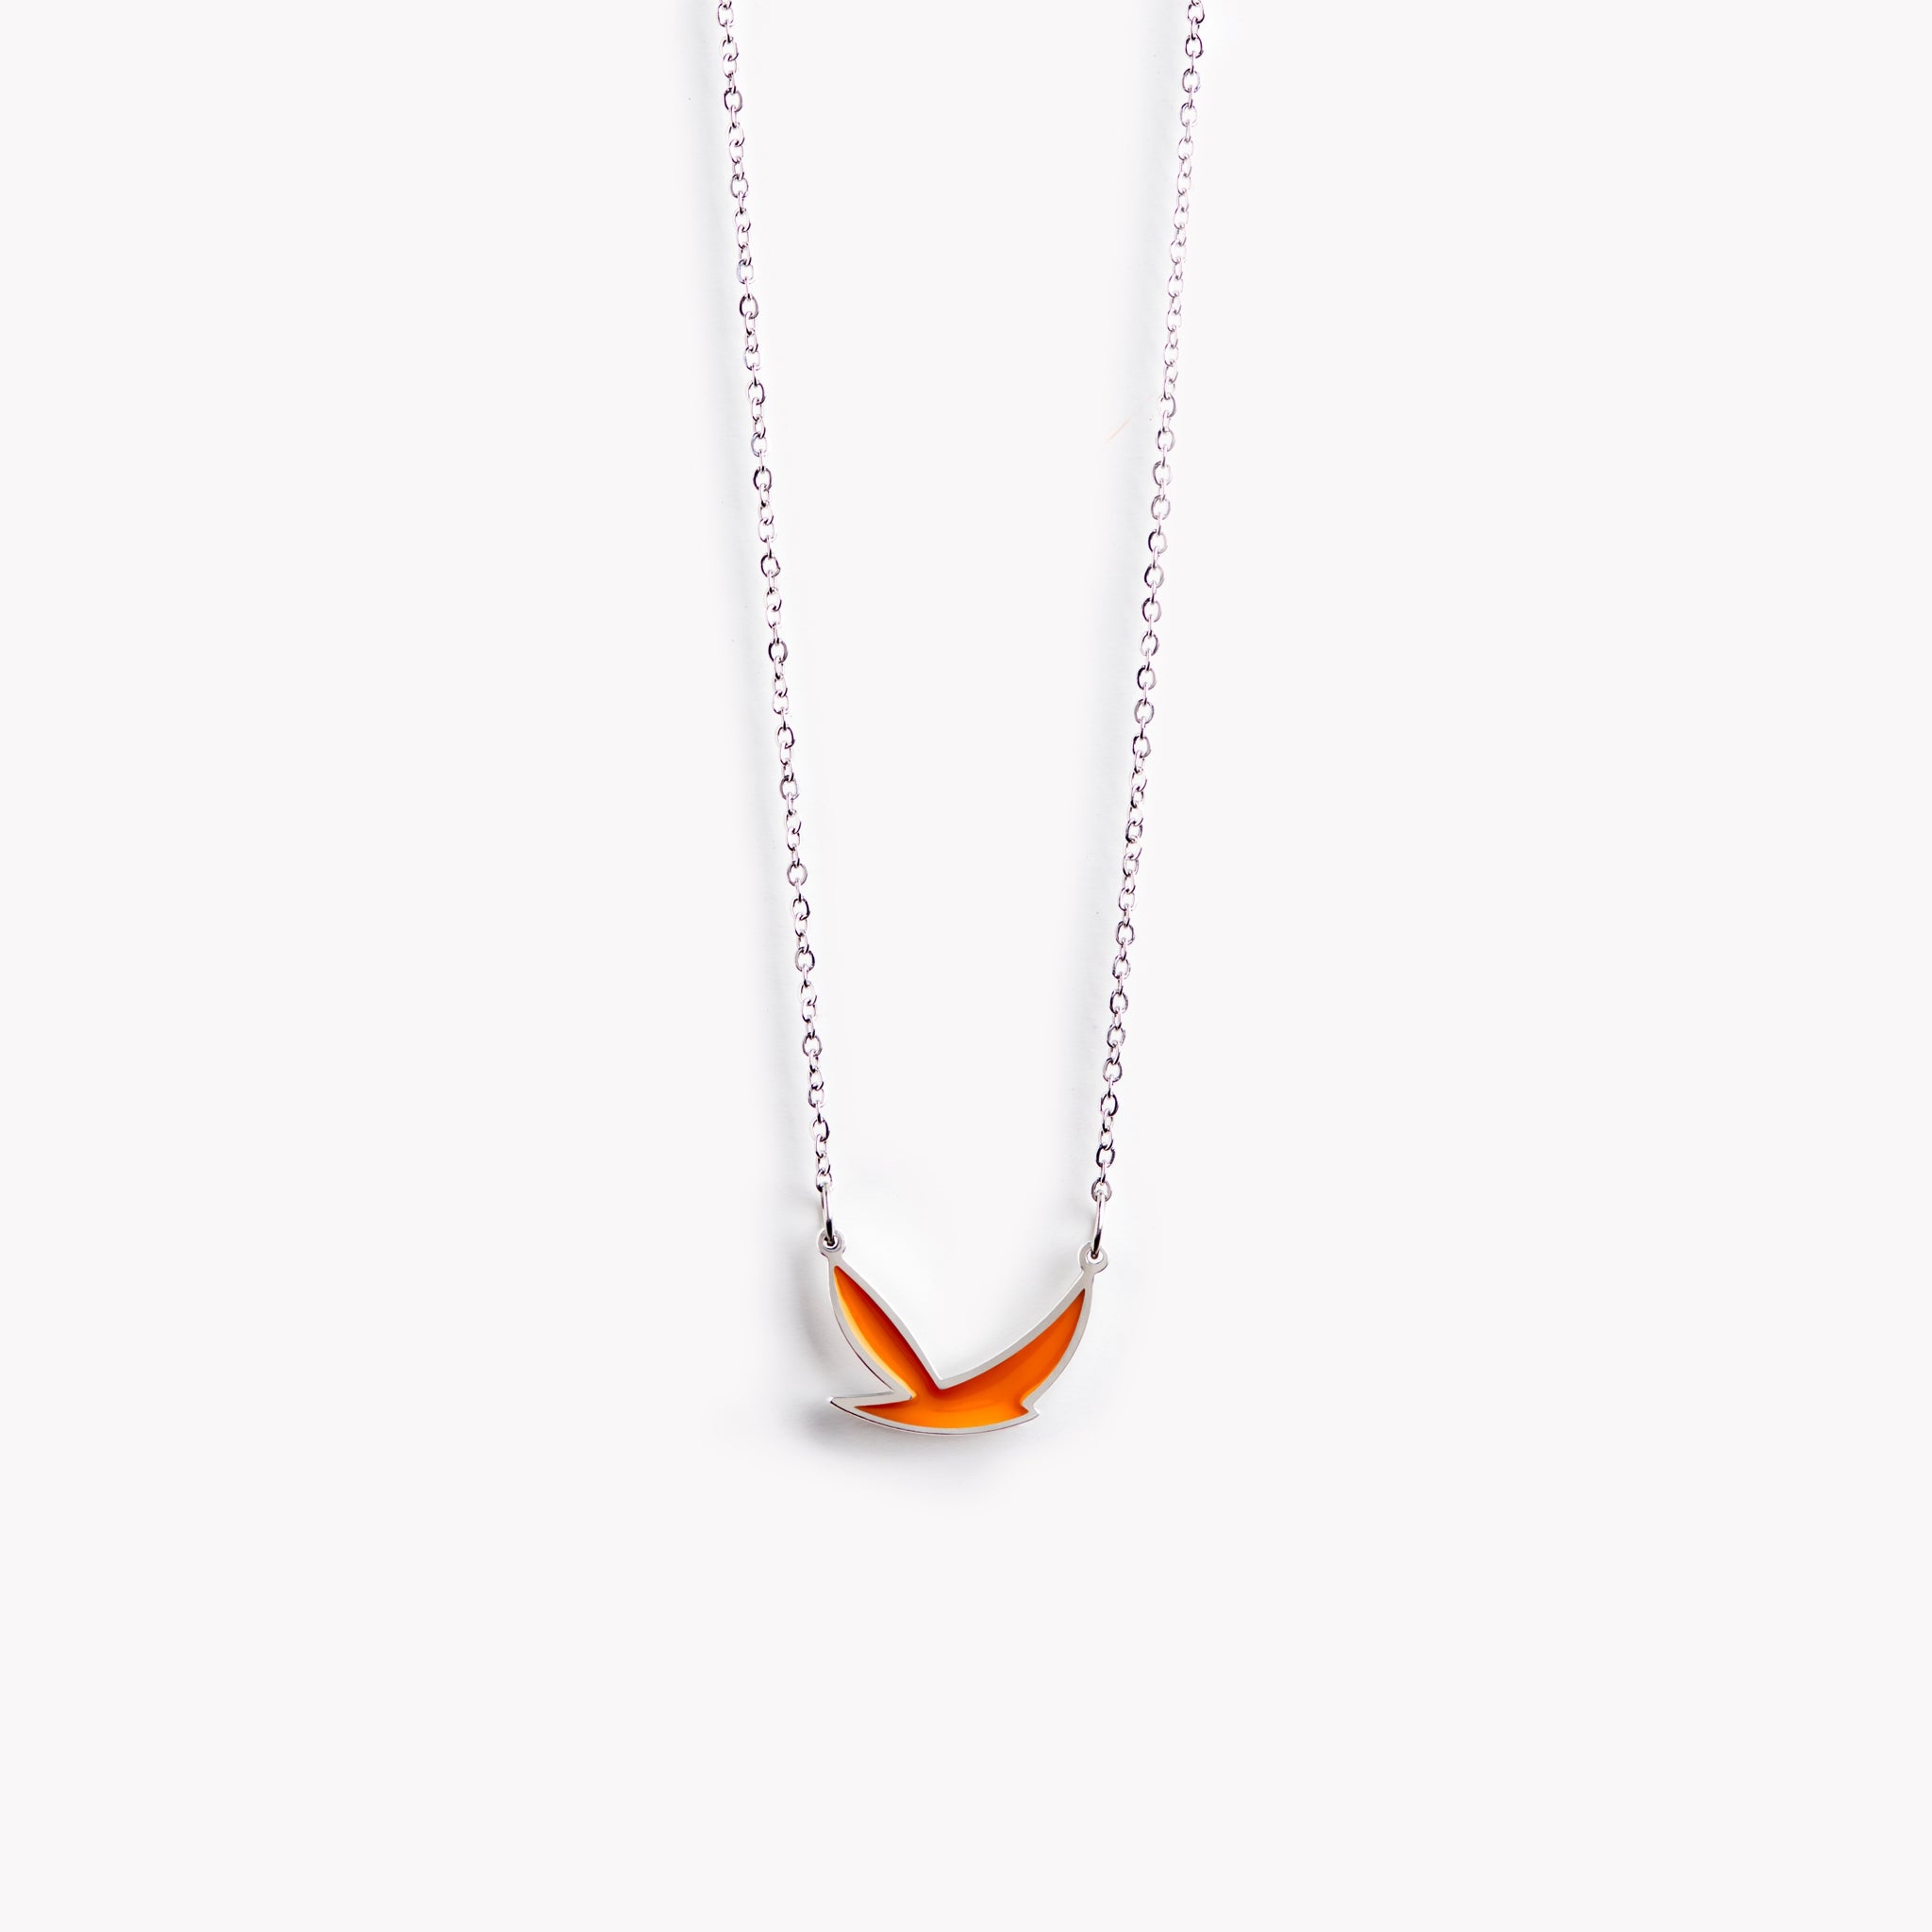 A simple, stylish, and dynamic orange bird necklace.